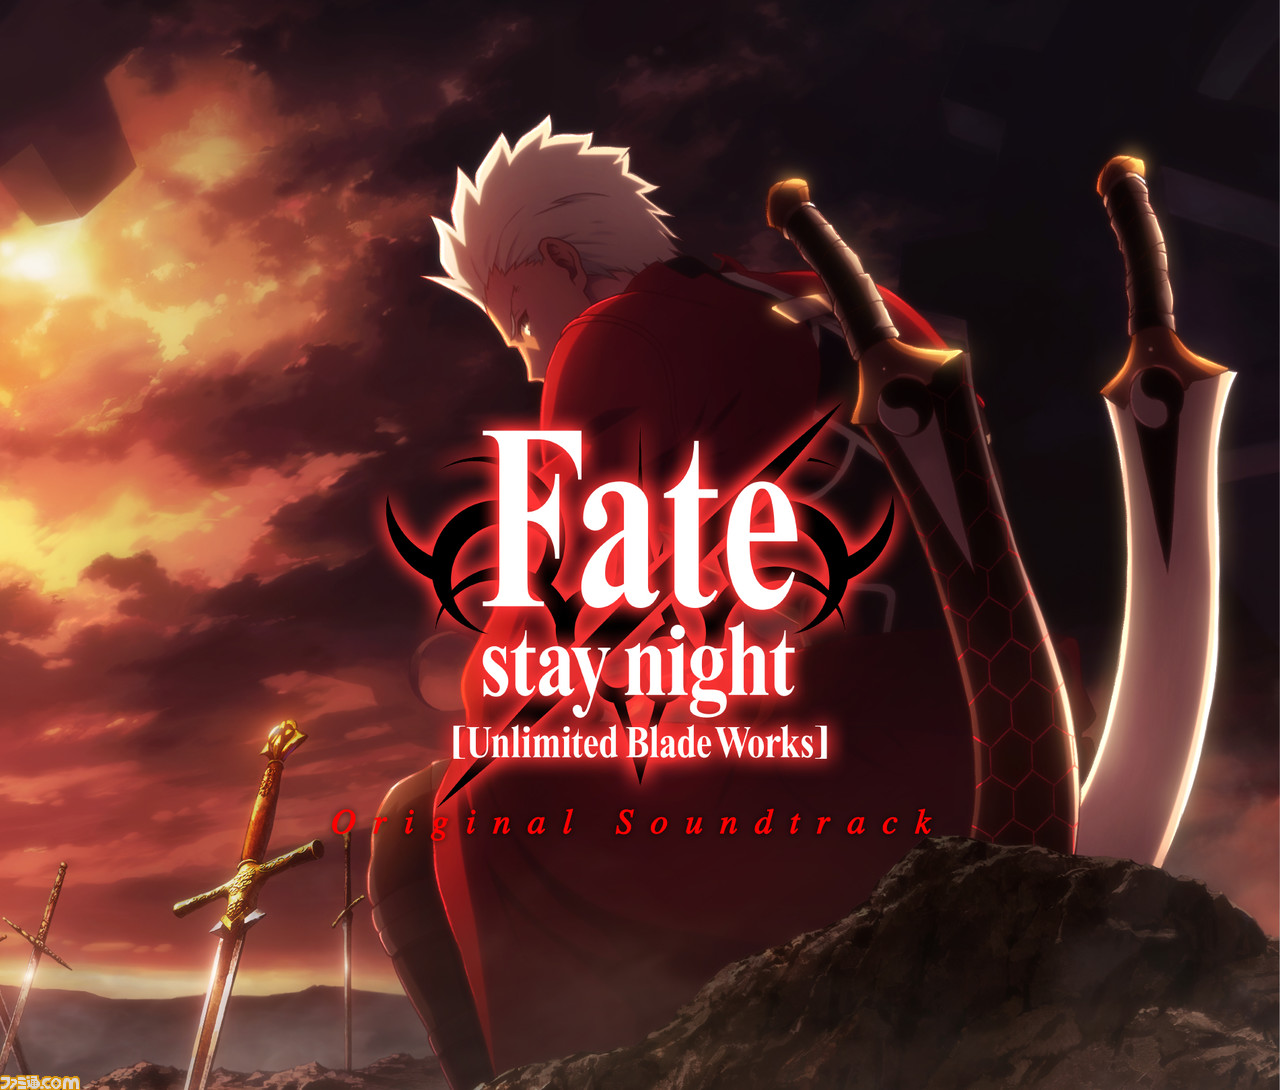 Fate Stay Night Unlimited Blade Works サントラ Ufotable描き下ろしジャケットが公開 こちらを見つめるアーチャーがかっこいい ファミ通 Com